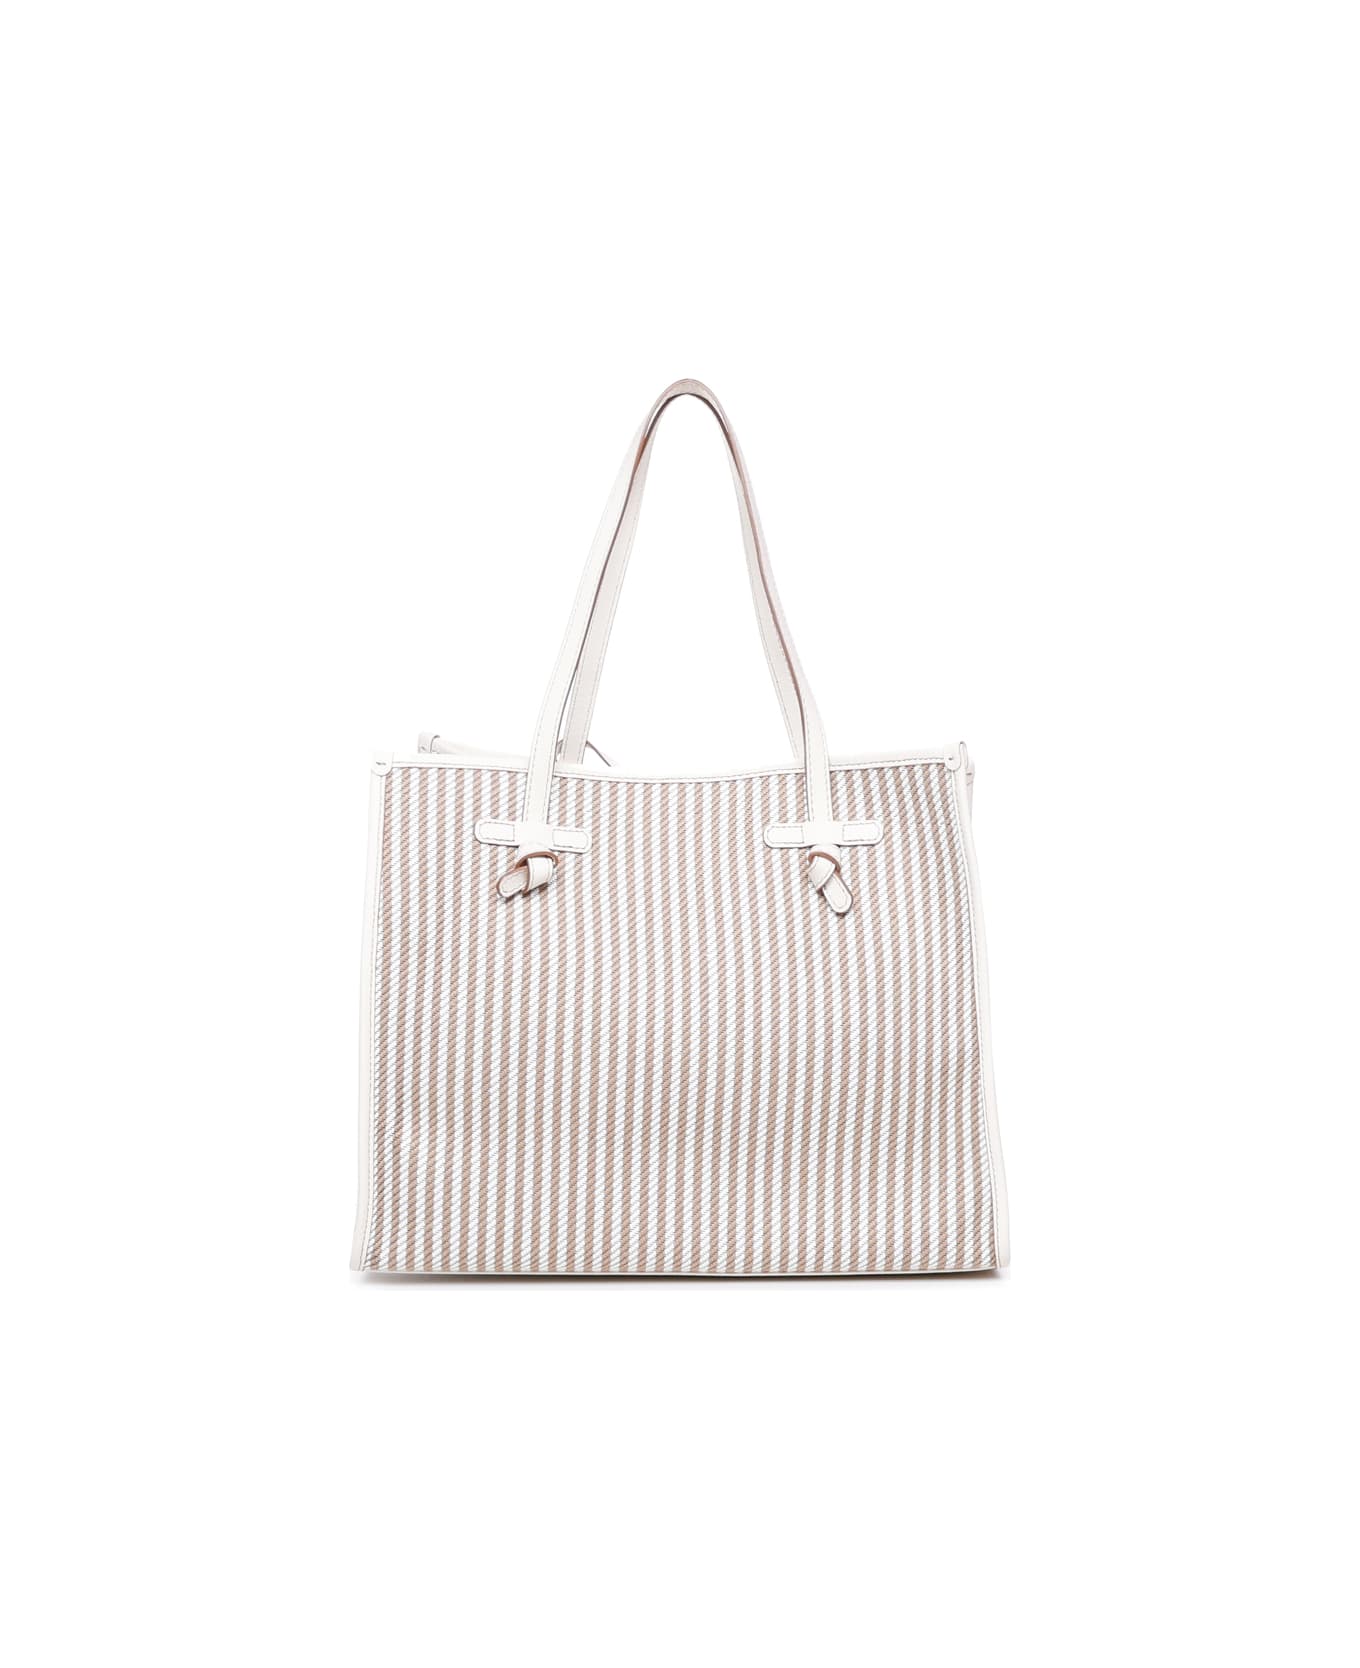 Gianni Chiarini Marcella Shopping Bag In Canvas - White